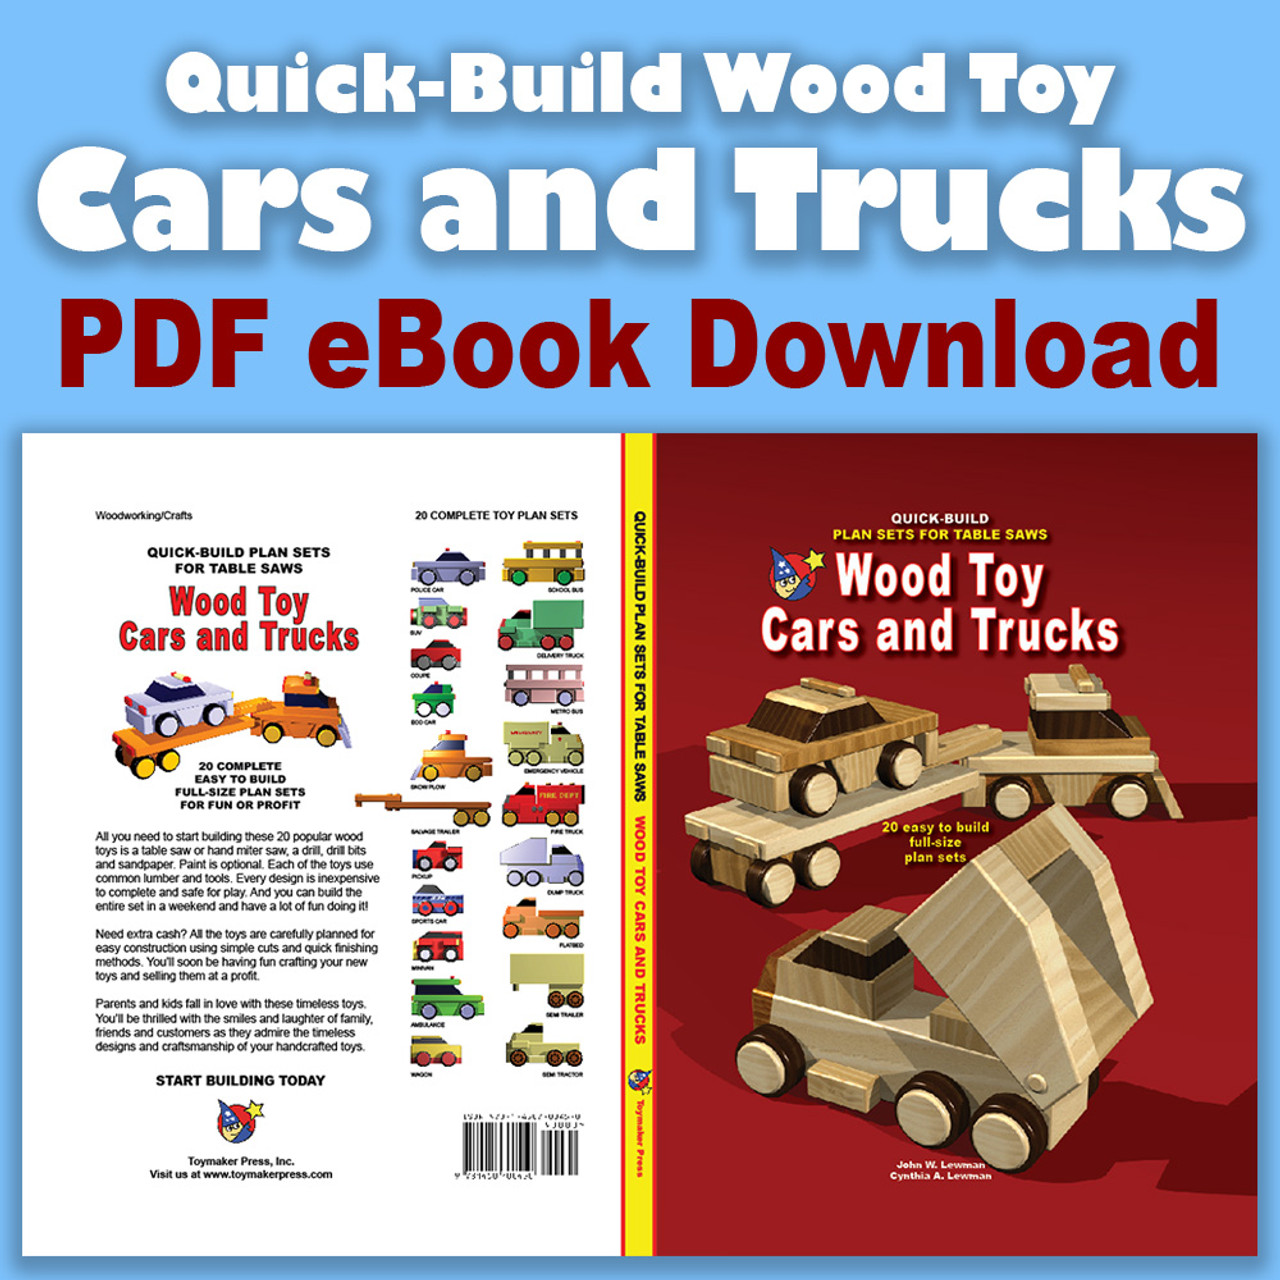 Six Ways to Build Your Kids Toy Wagon – Free Woodworking Plan.com